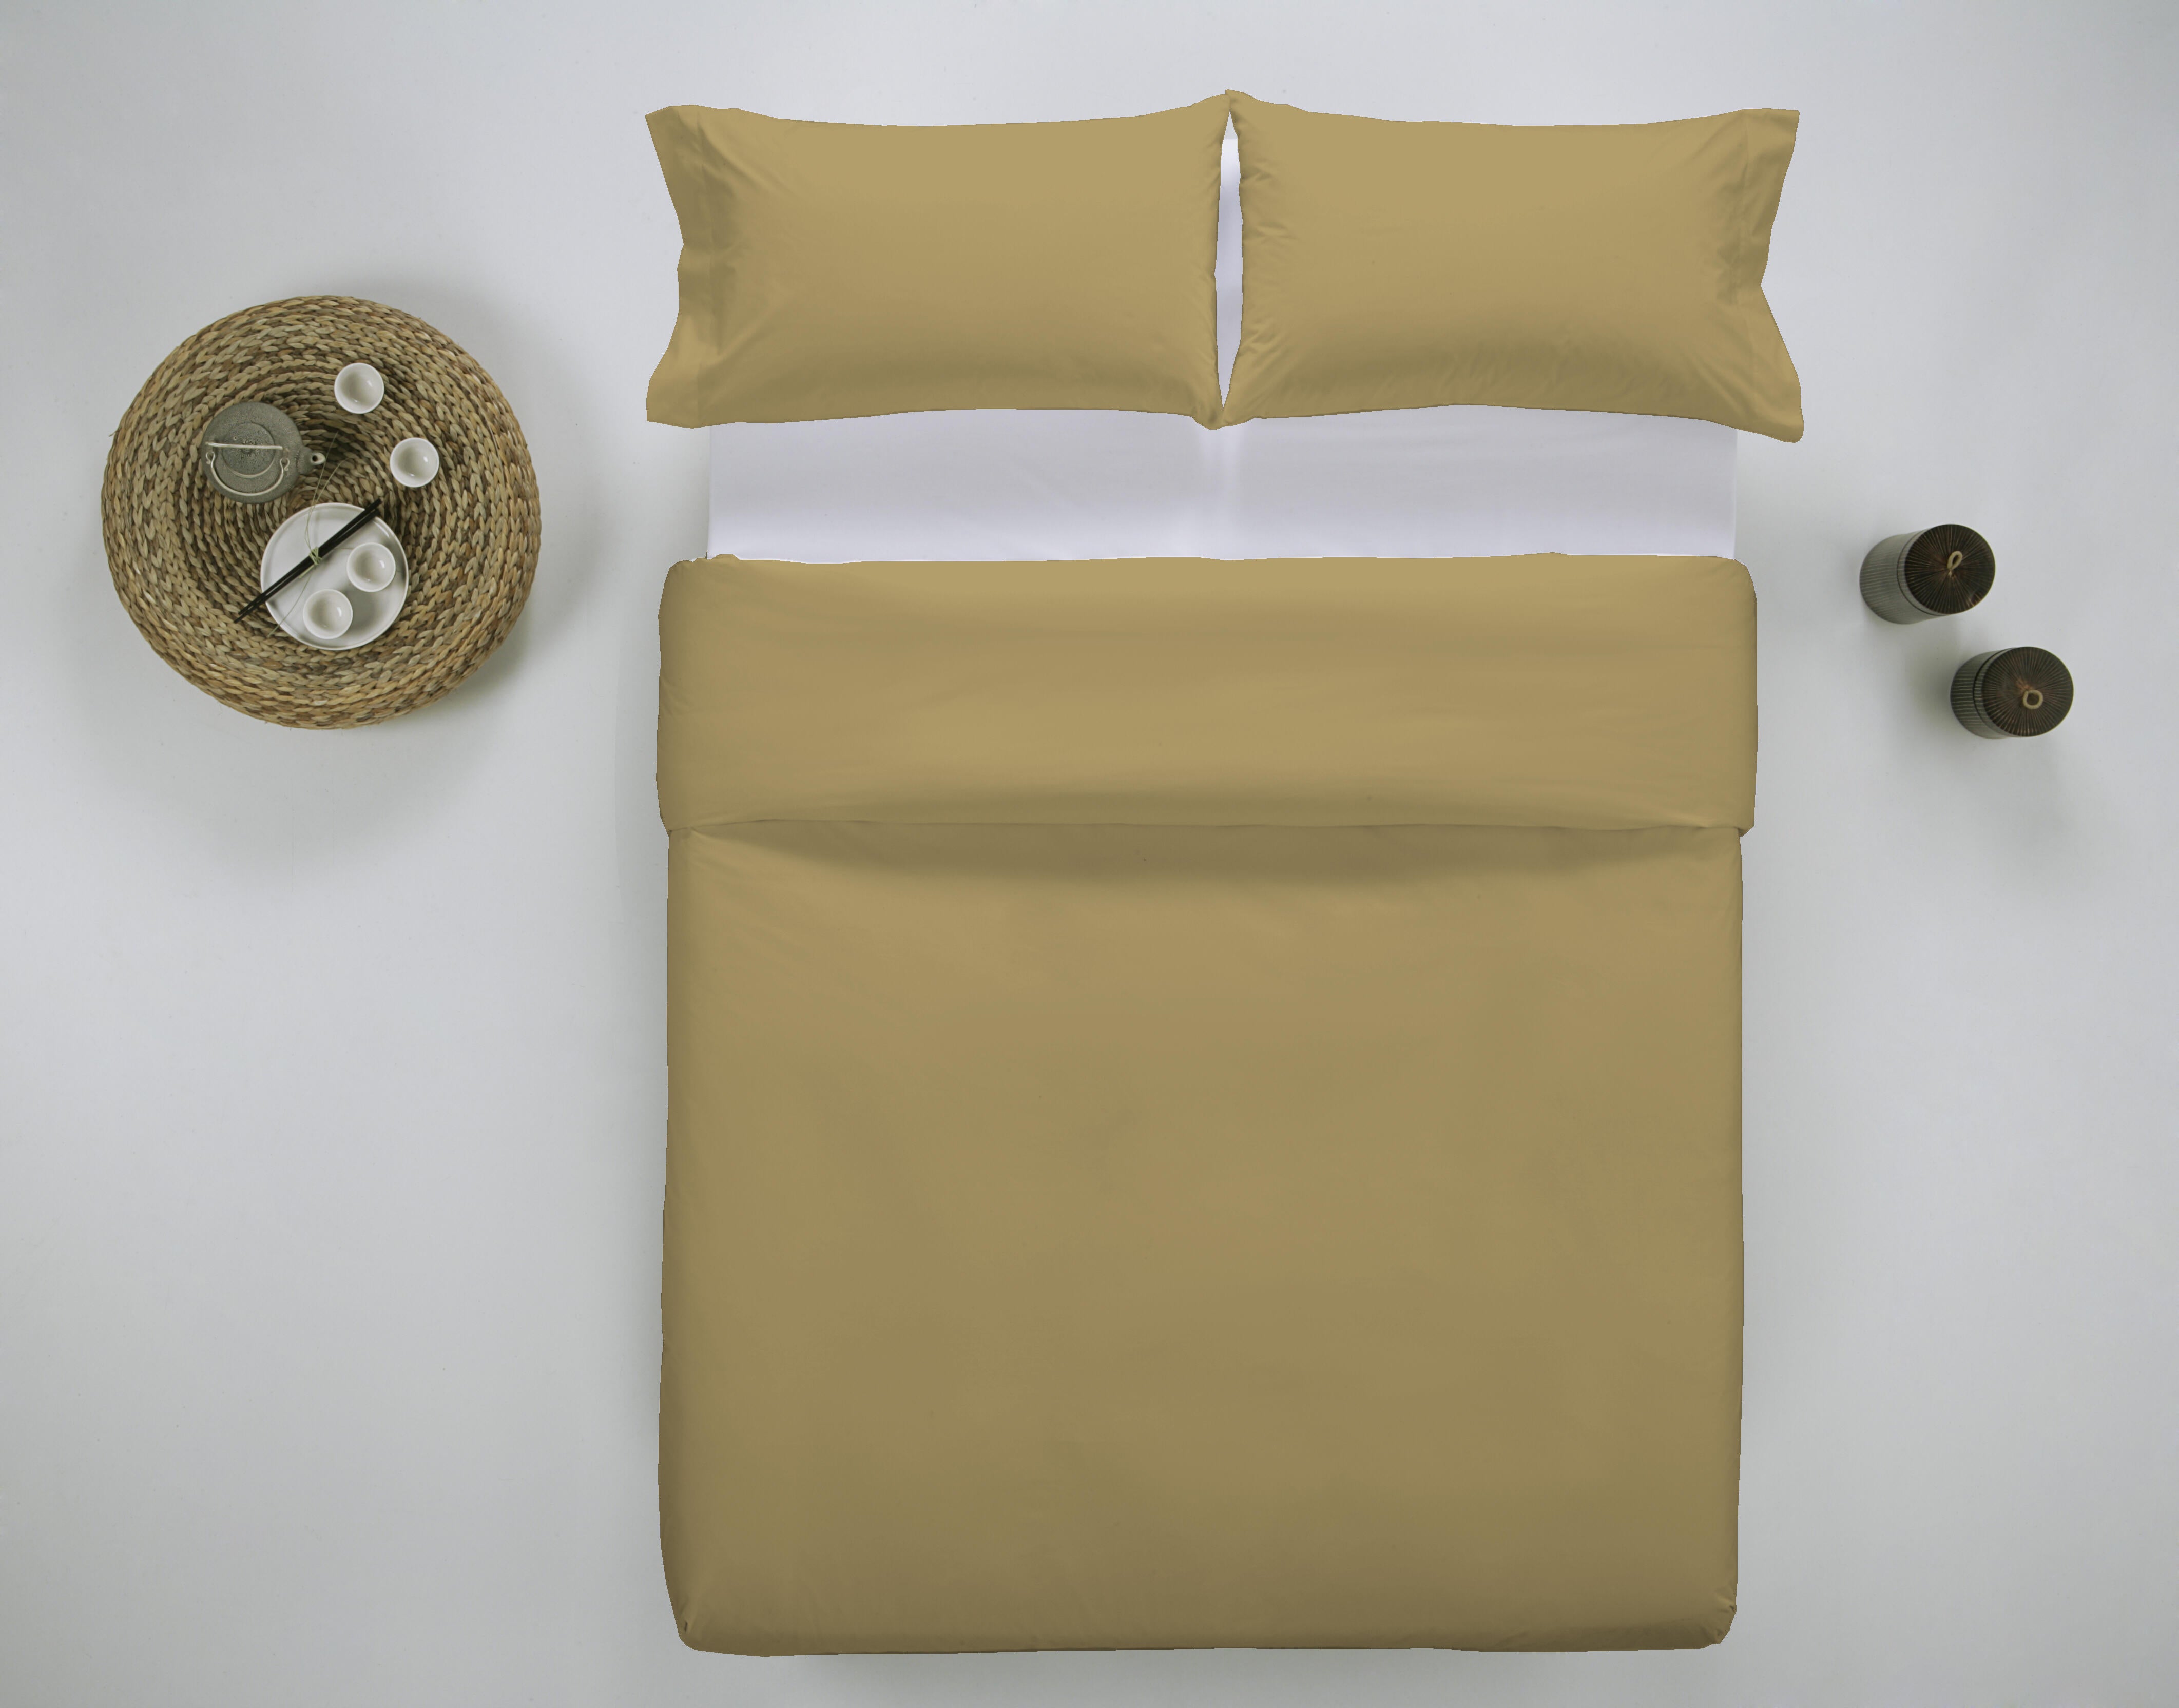 Funda nórdica wash grament lisa algodón 200 hilos amarillo mostaza cama 180 cm